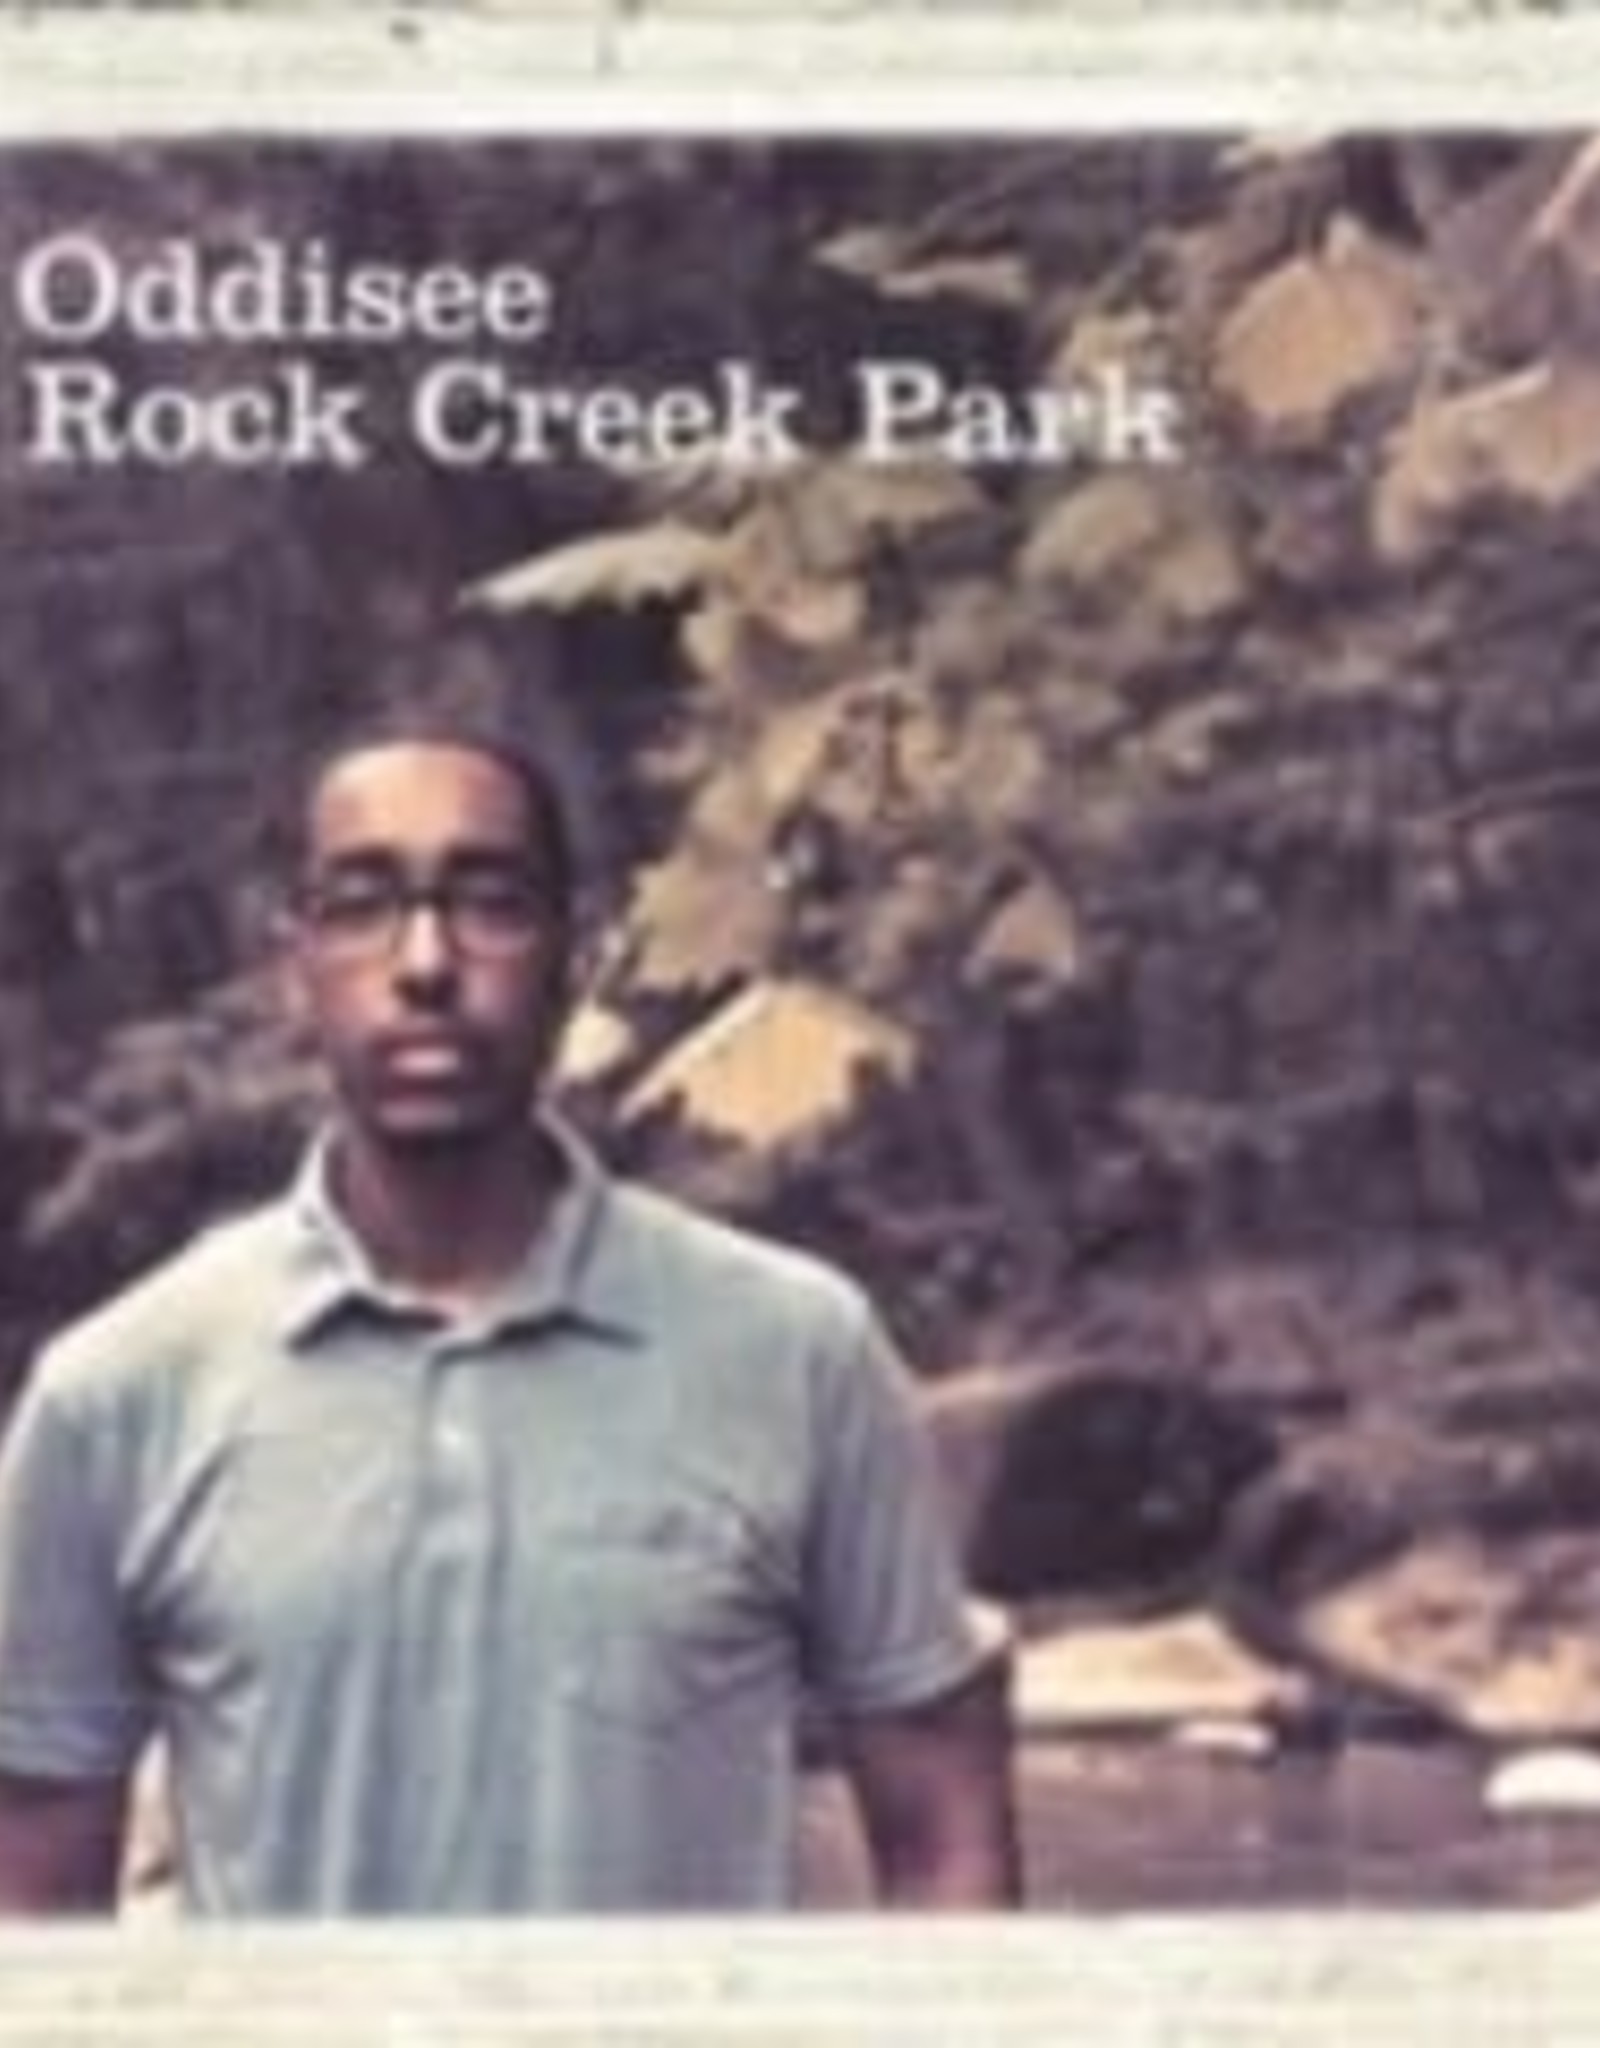 Oddisee - Rock Creek Park (Autumn Gold Vinyl)